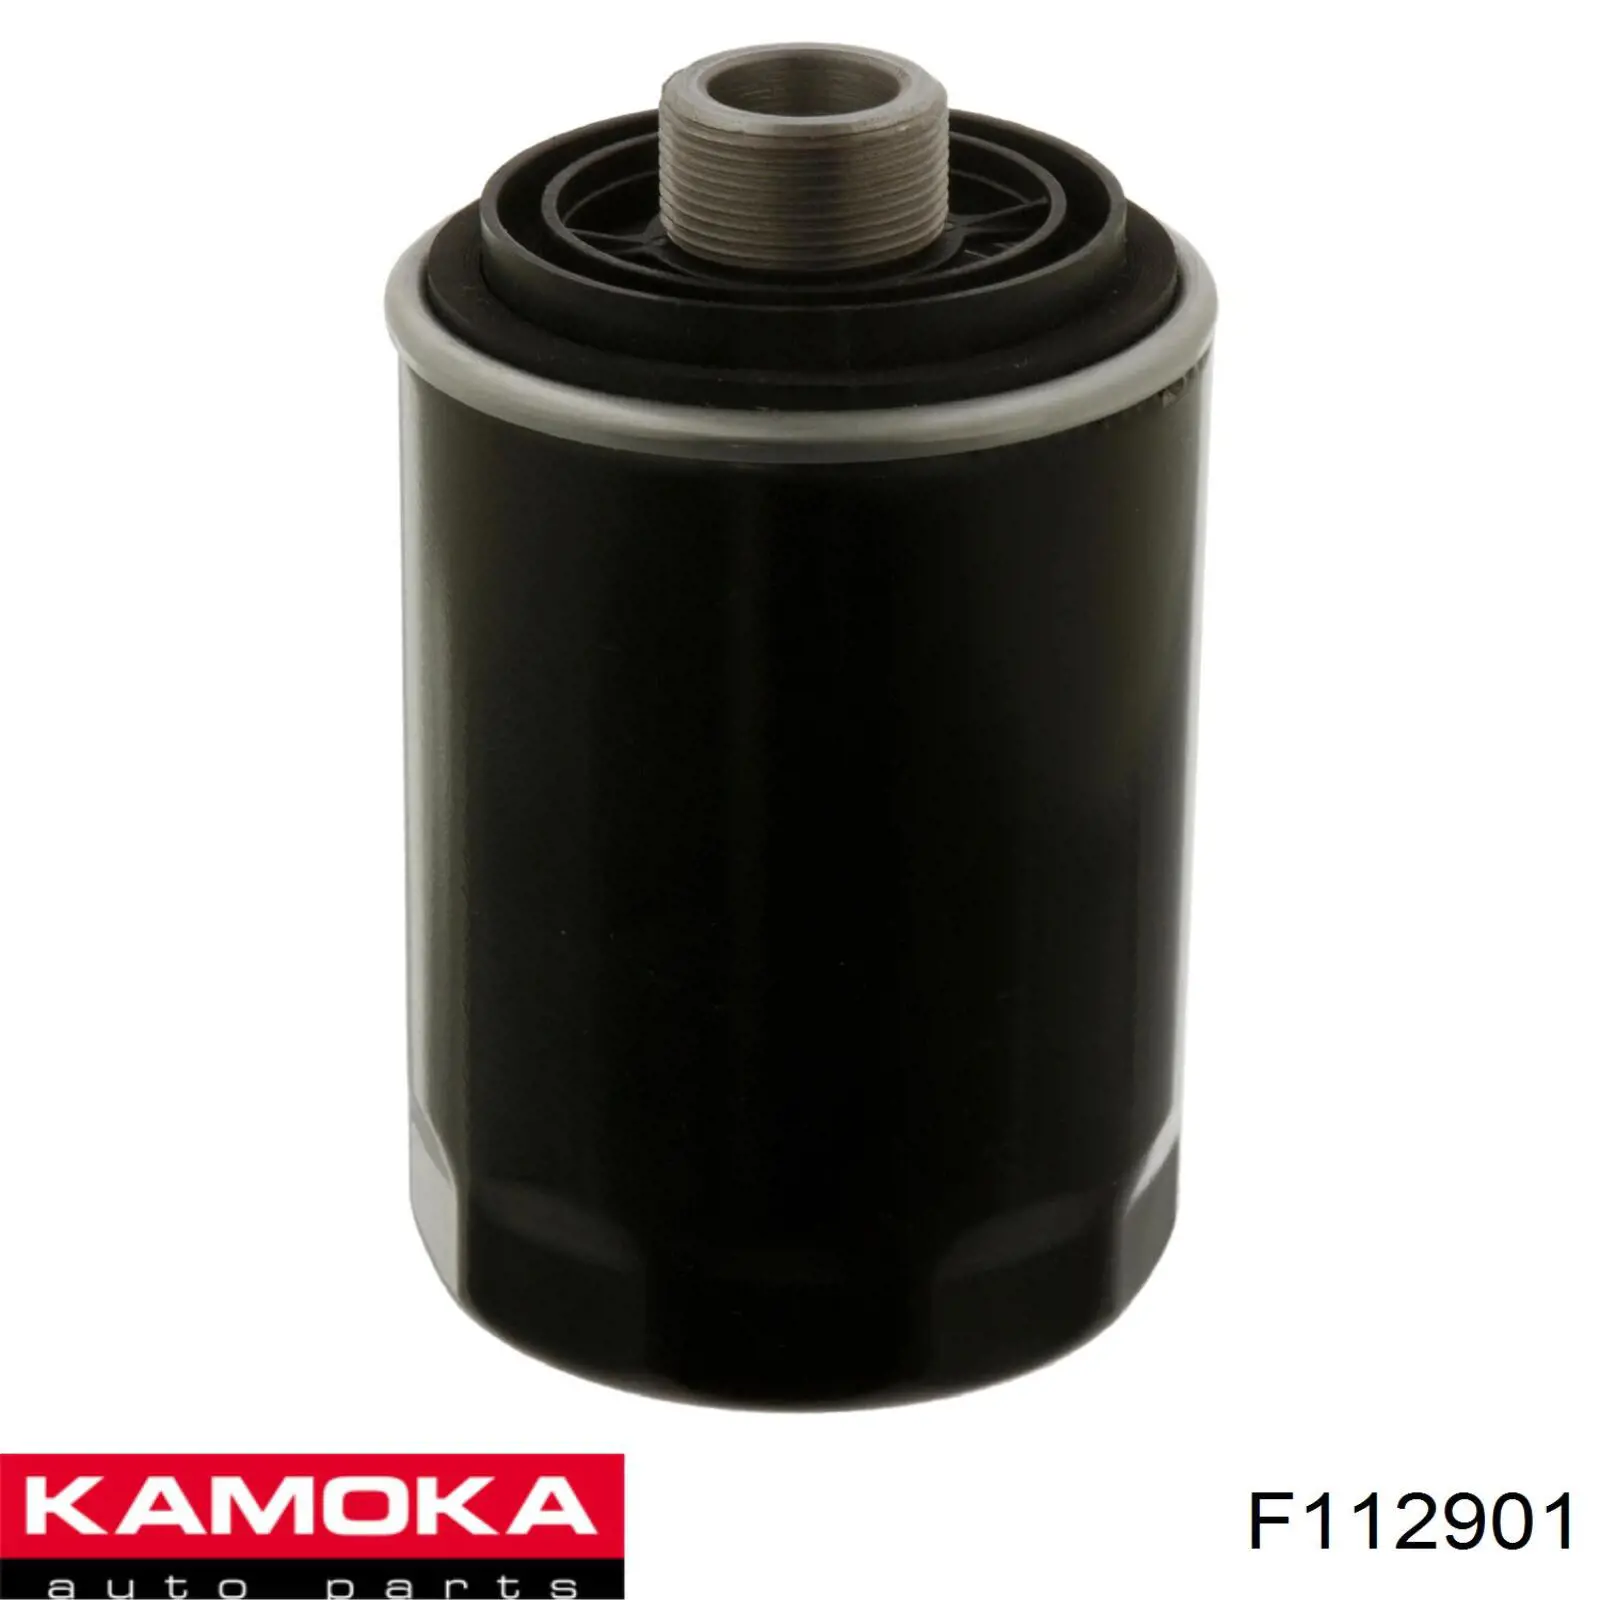 F112901 Kamoka filtro de aceite